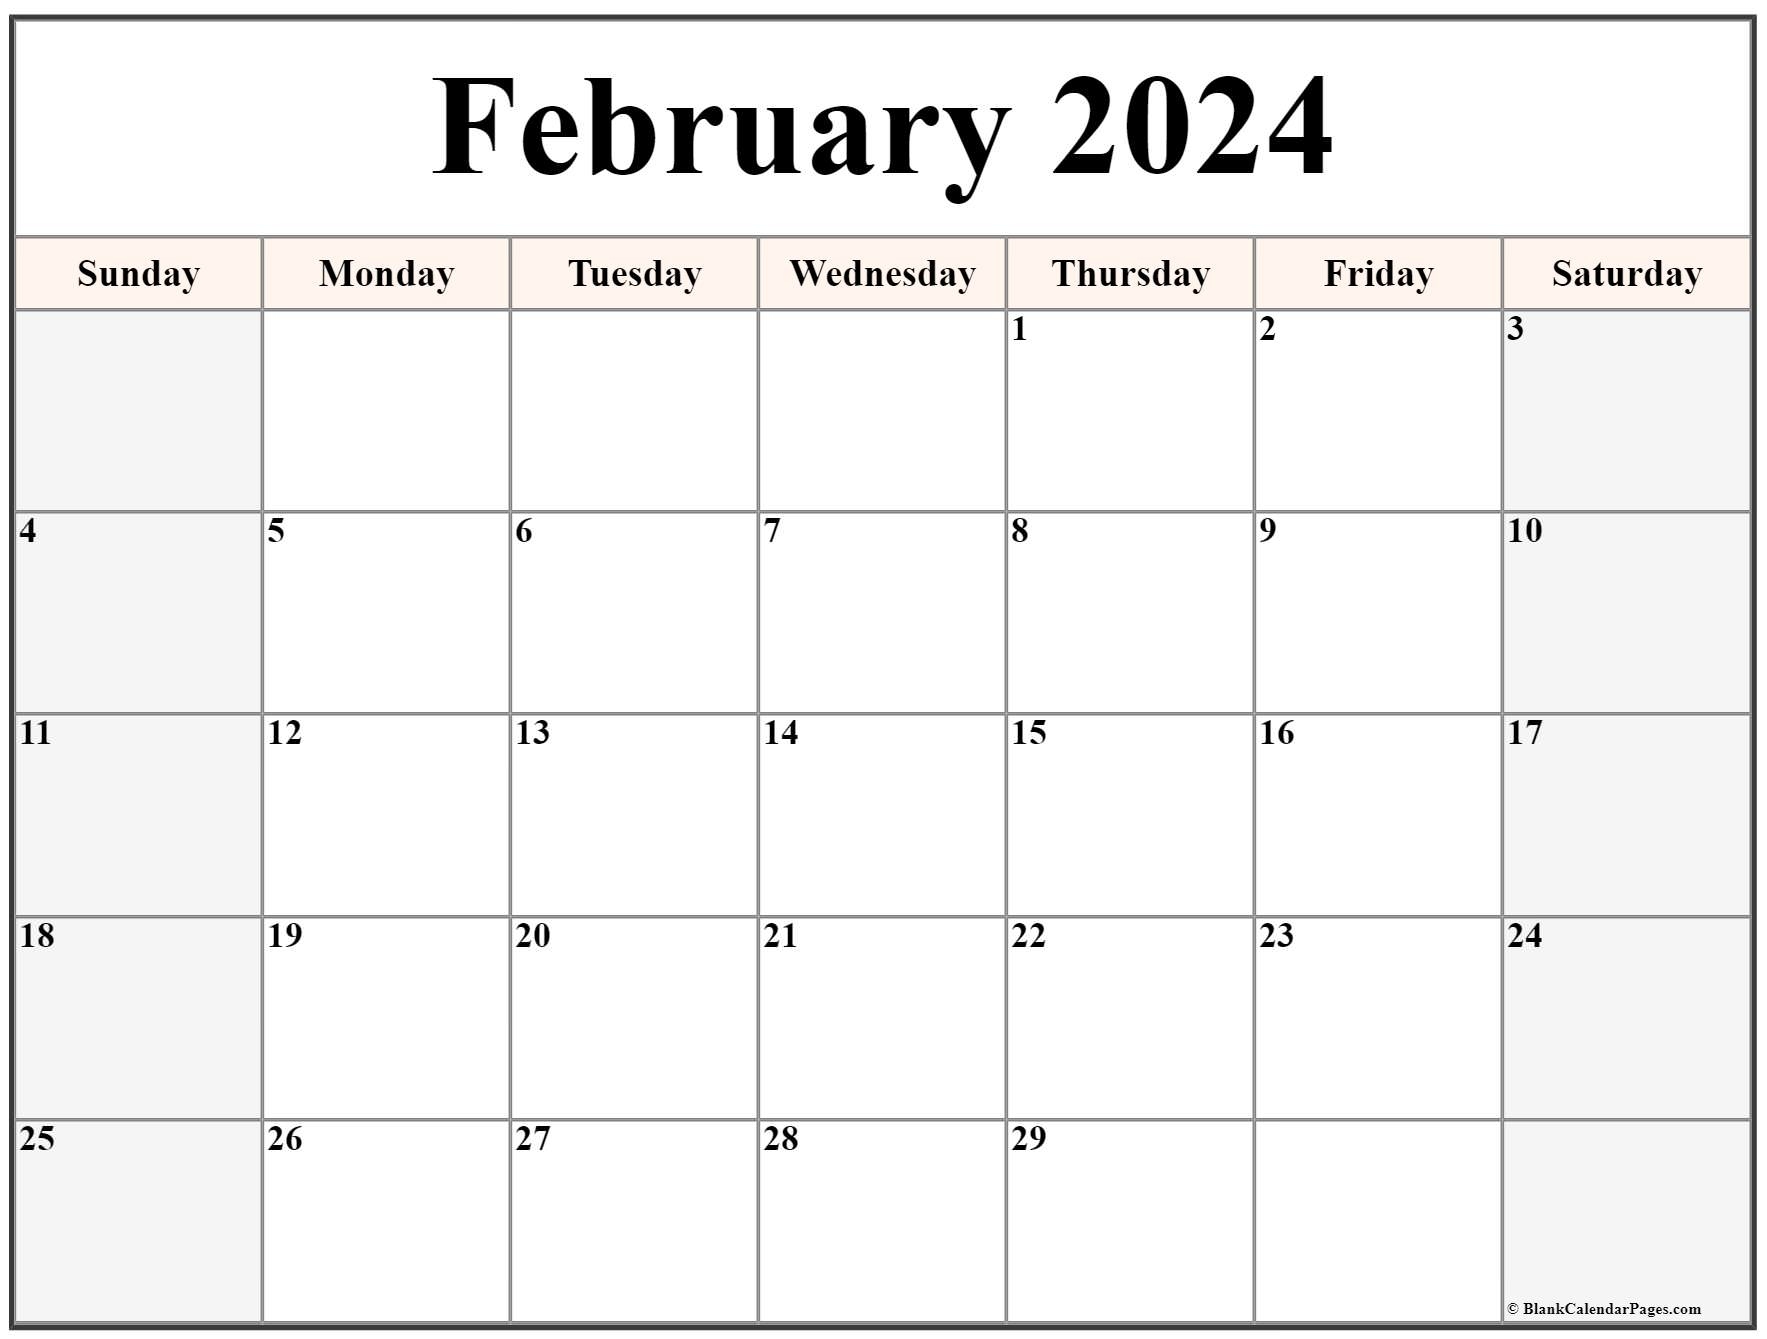 February 2024 Calendar | Free Printable Calendar with Free Printable Calendar 2024 Printfree